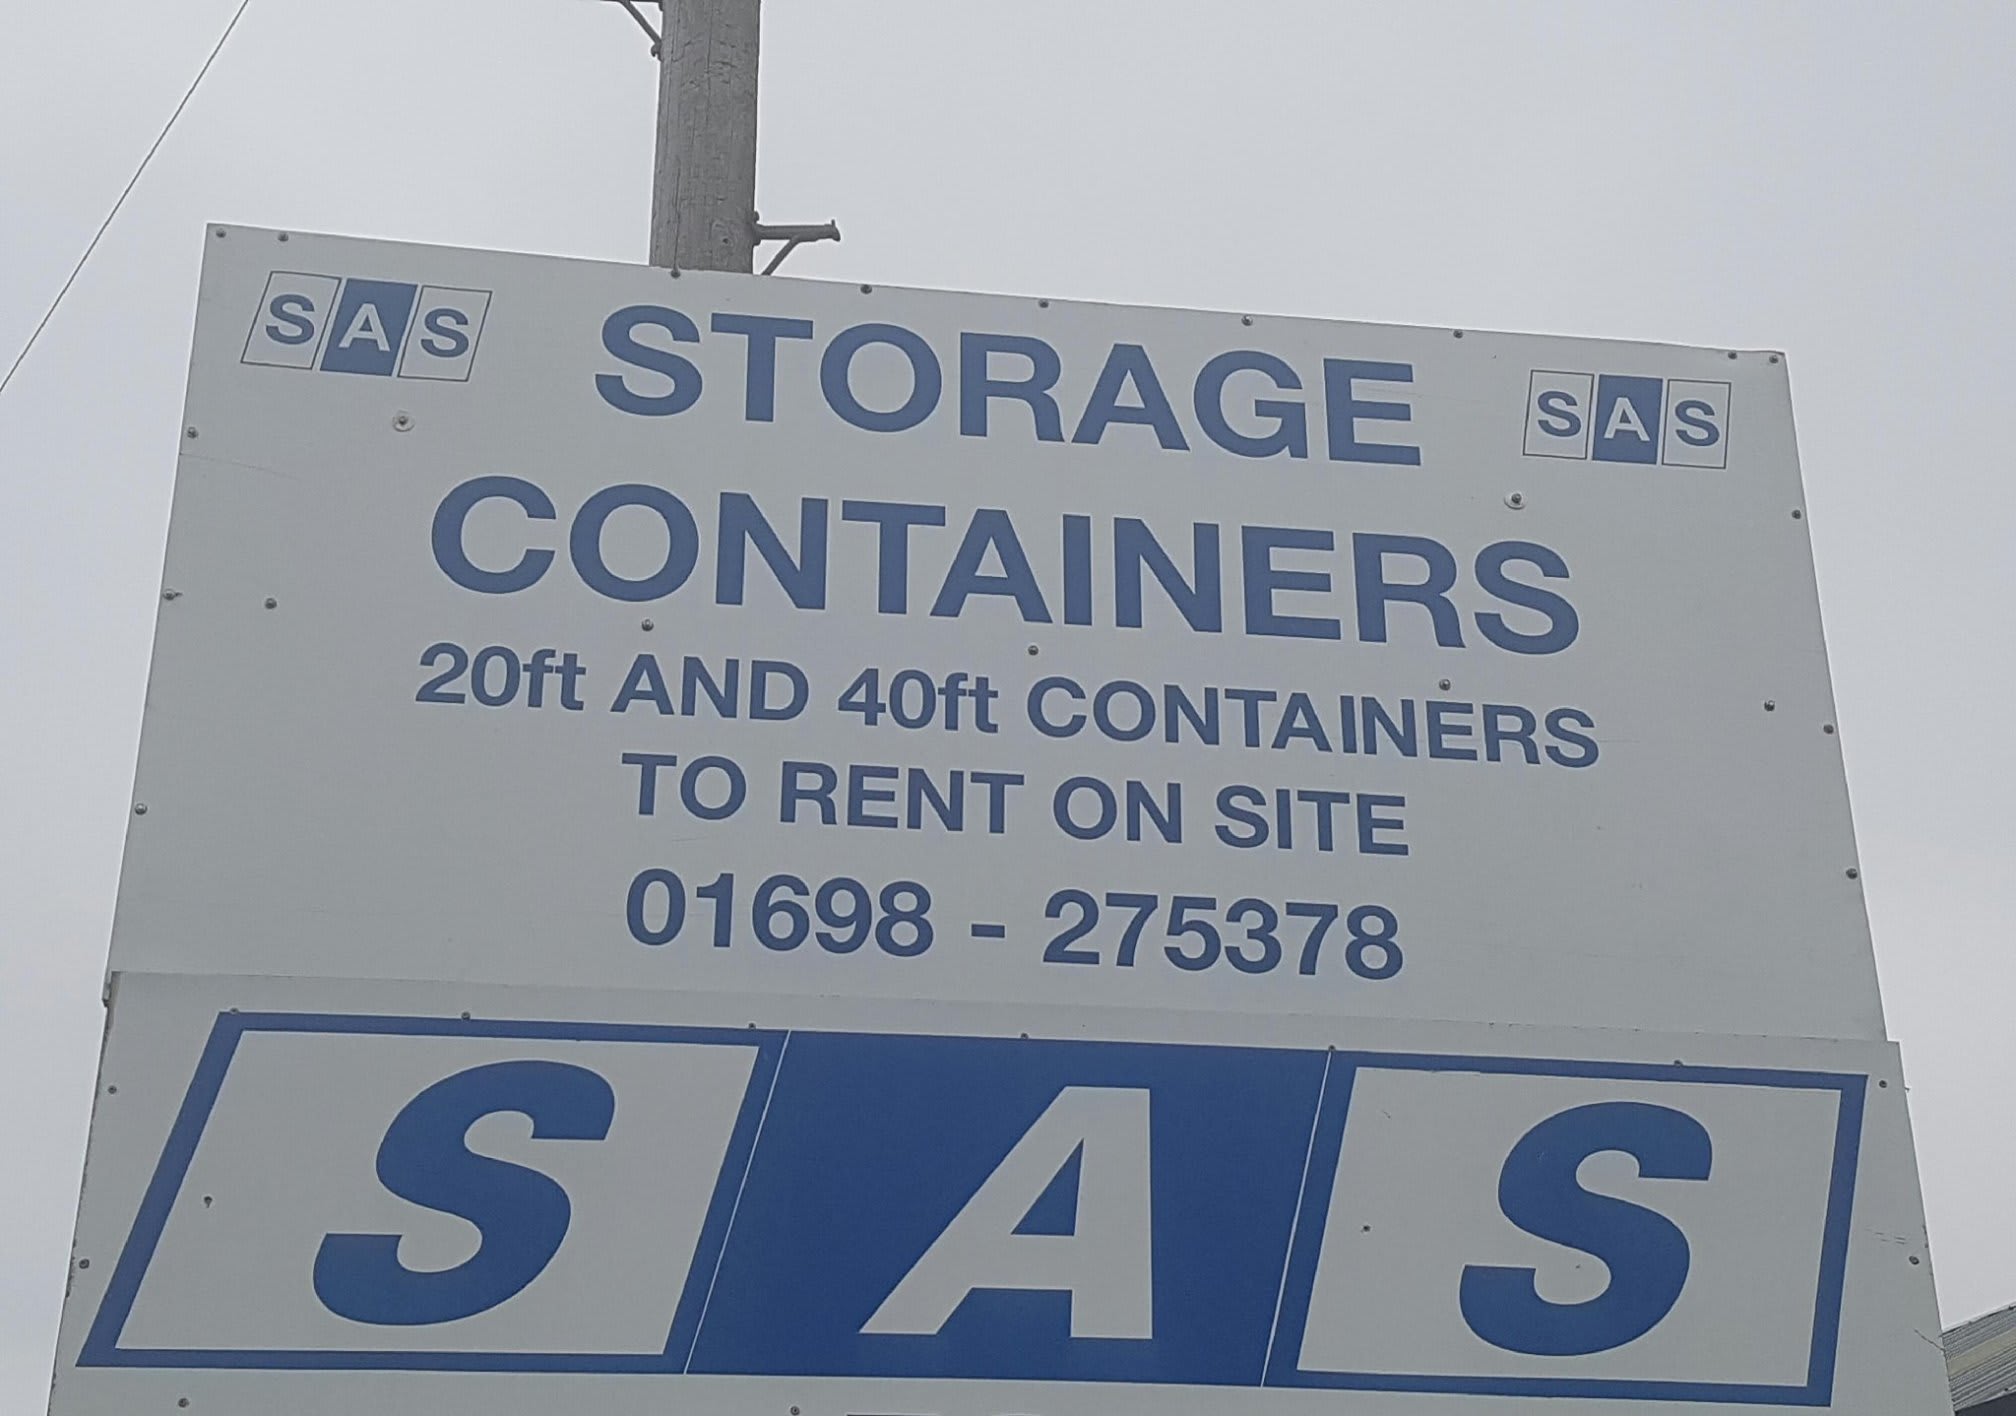 SAS Container Storage Motherwell 01698 275378